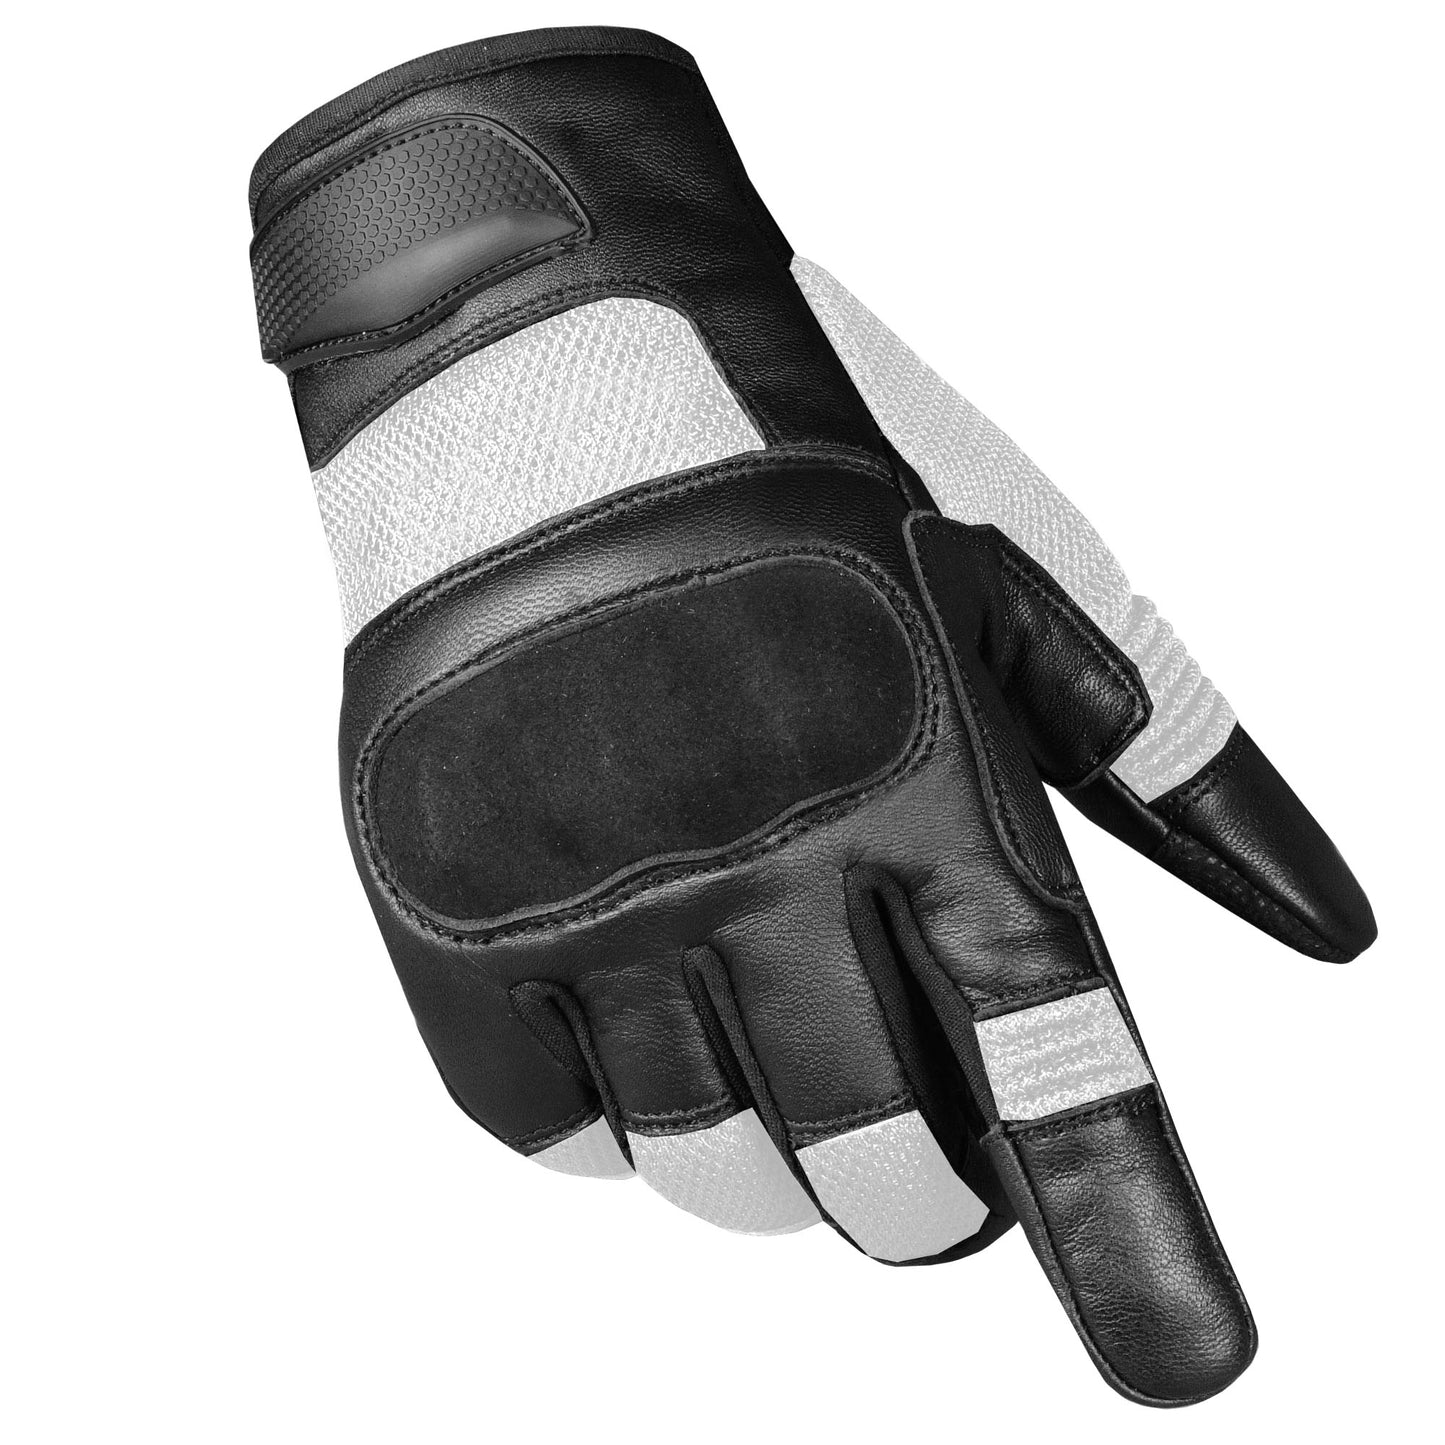 Jackets 4 Bikes Men's Motorcycle Tactical Premium Goat Leather & AirMesh Biker Gloves White